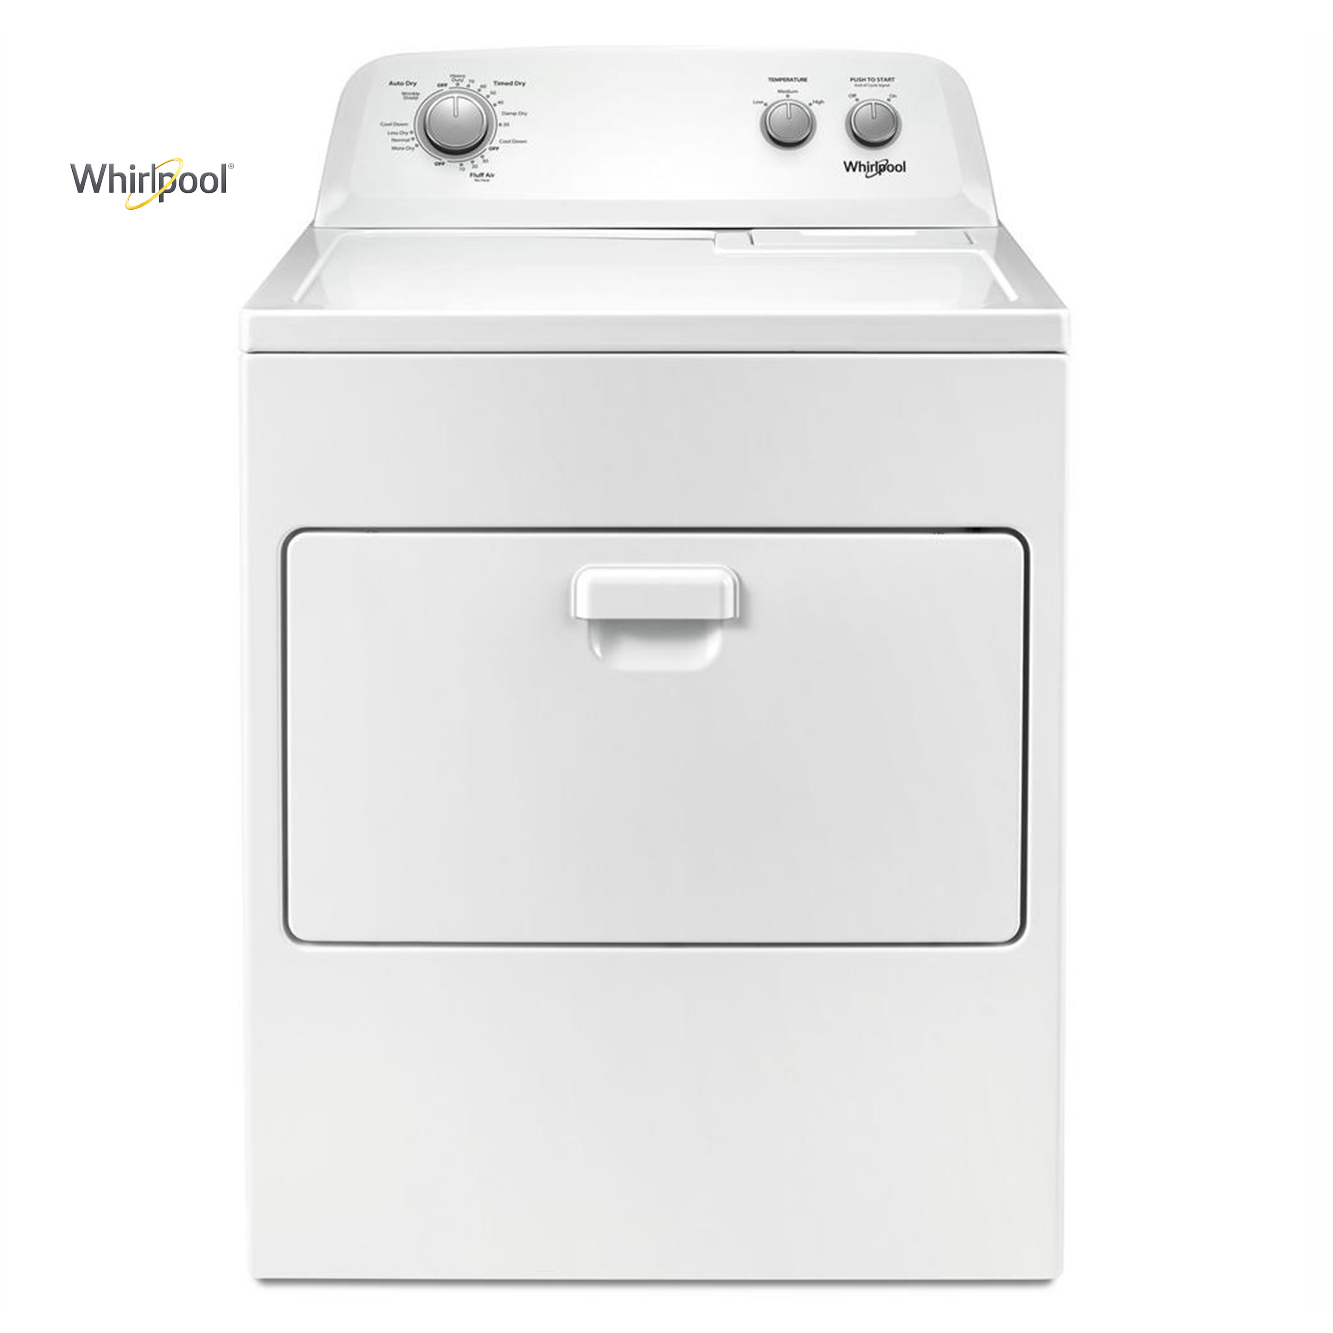  Secadora portátil, secadora eléctrica de ropa de 1100